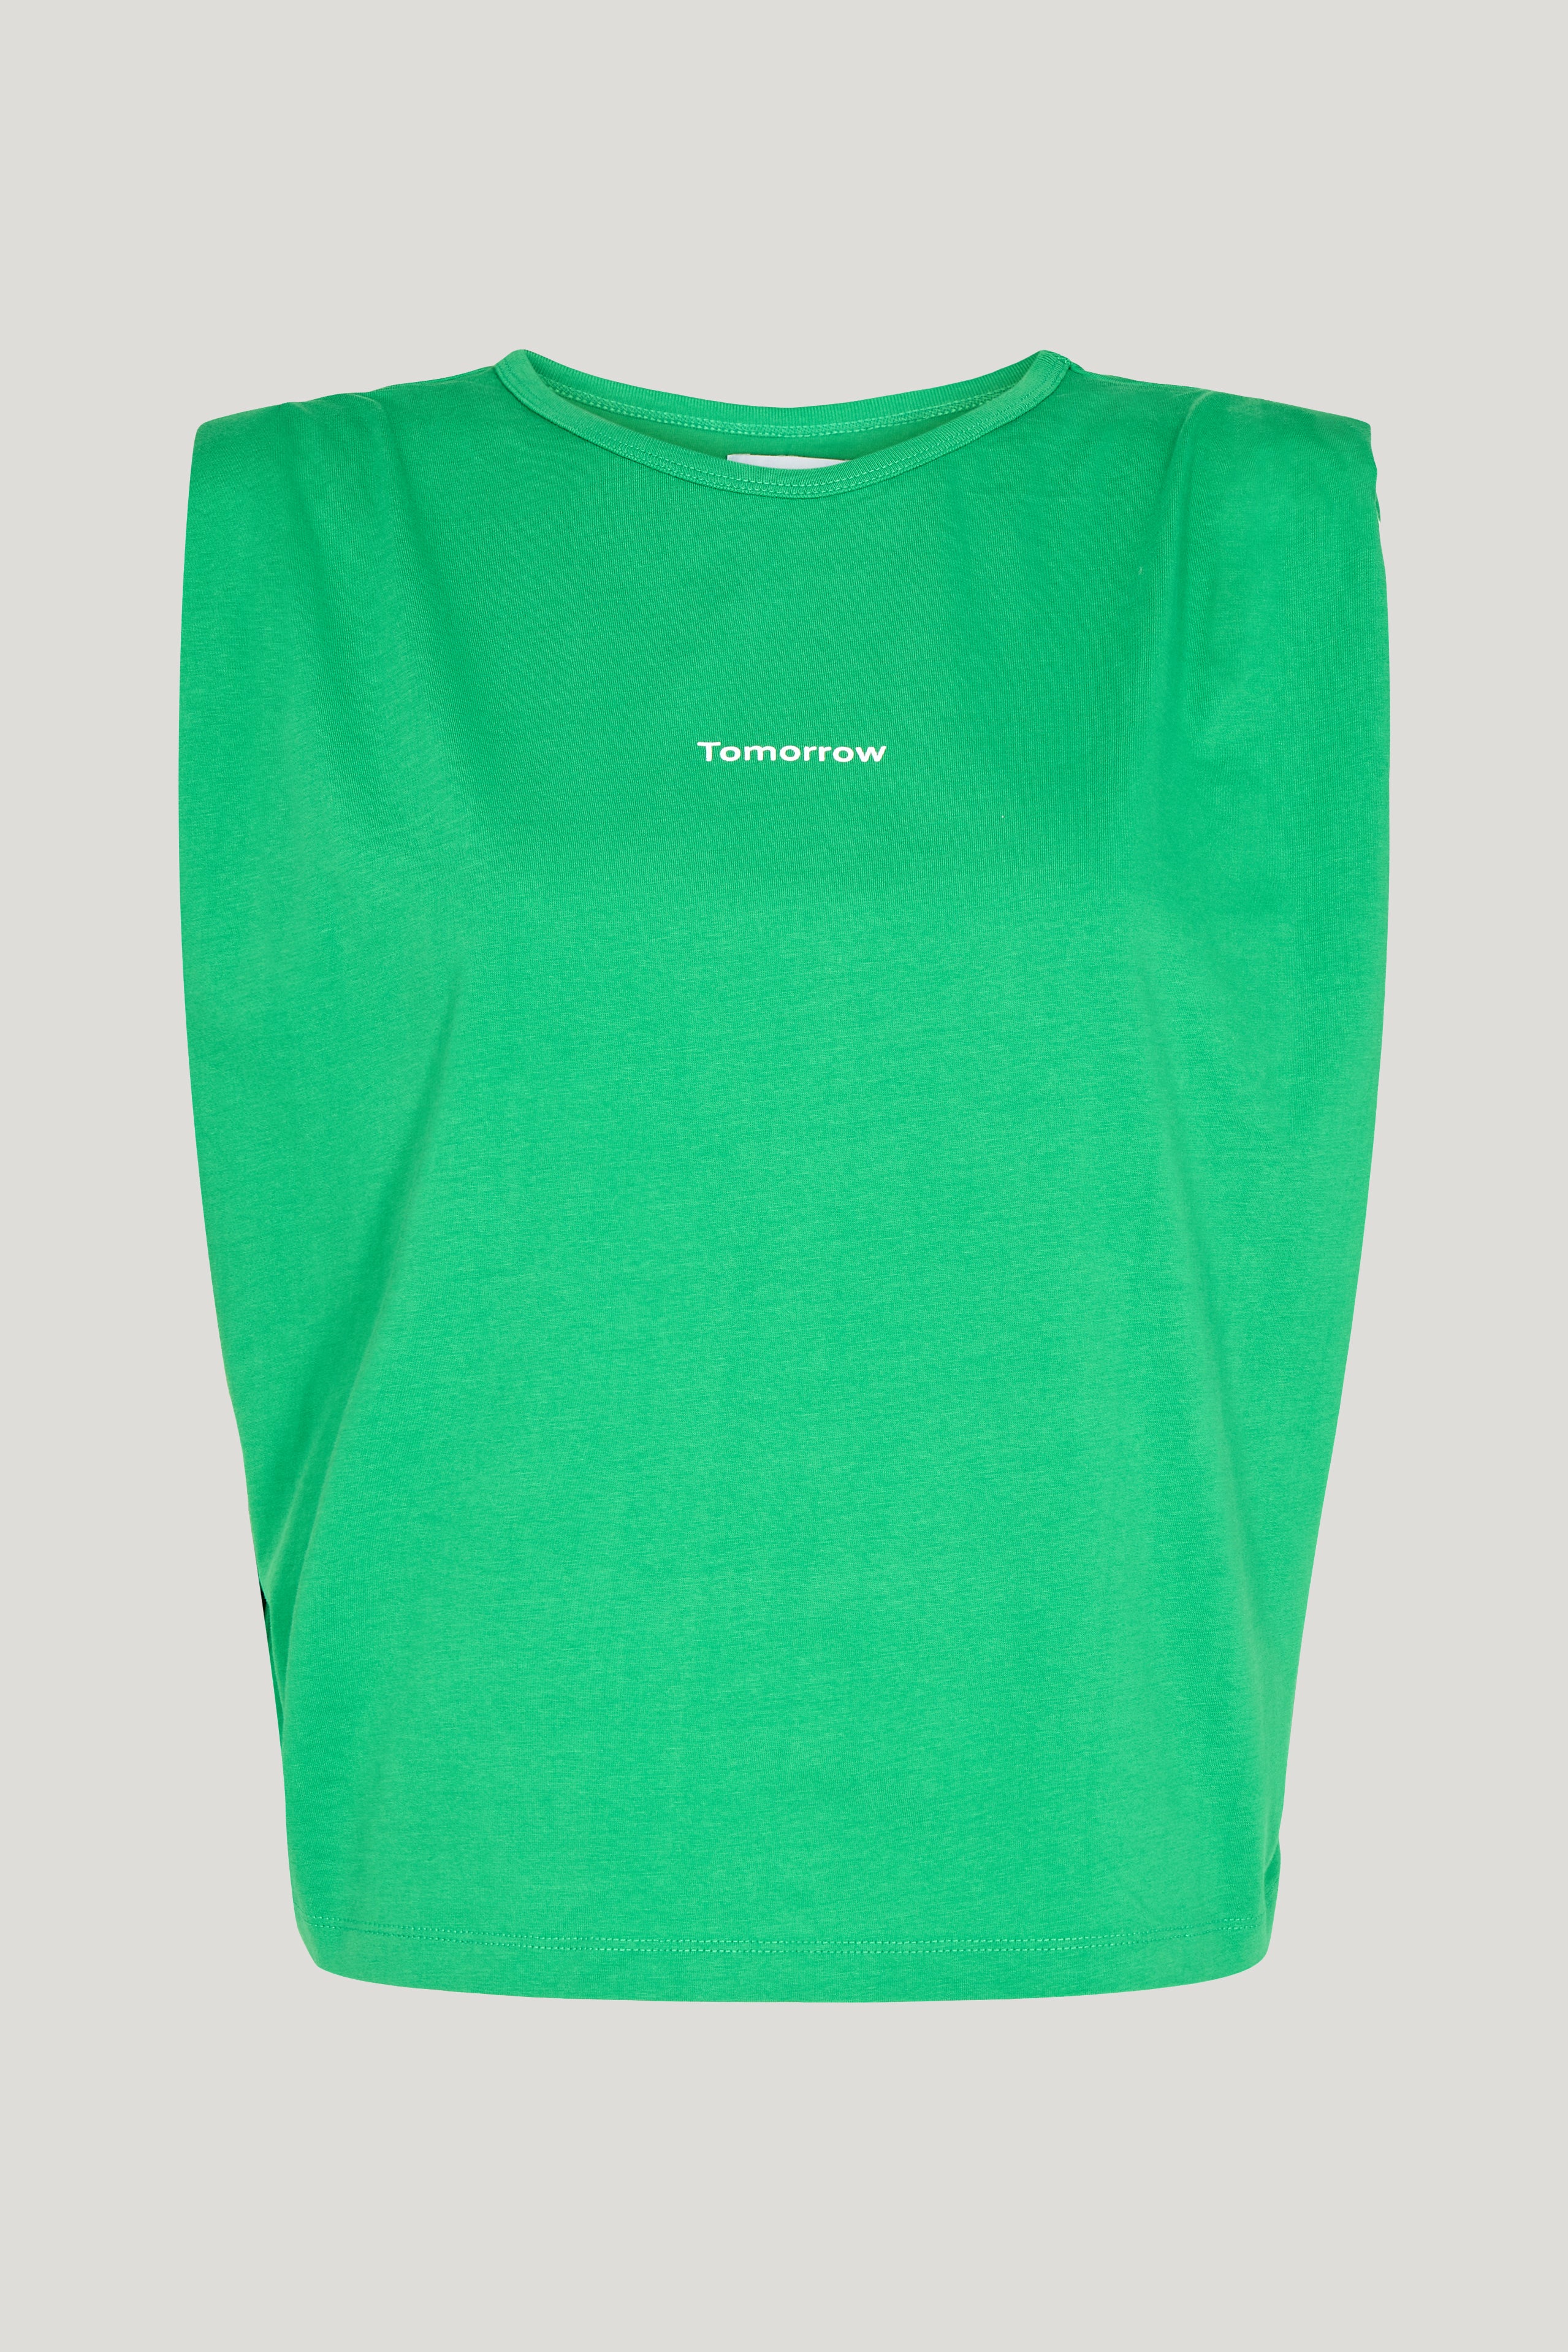 Tomorrow TD Casual Shoulder Pad Tank Tops & T-shirts 671 Earth Green